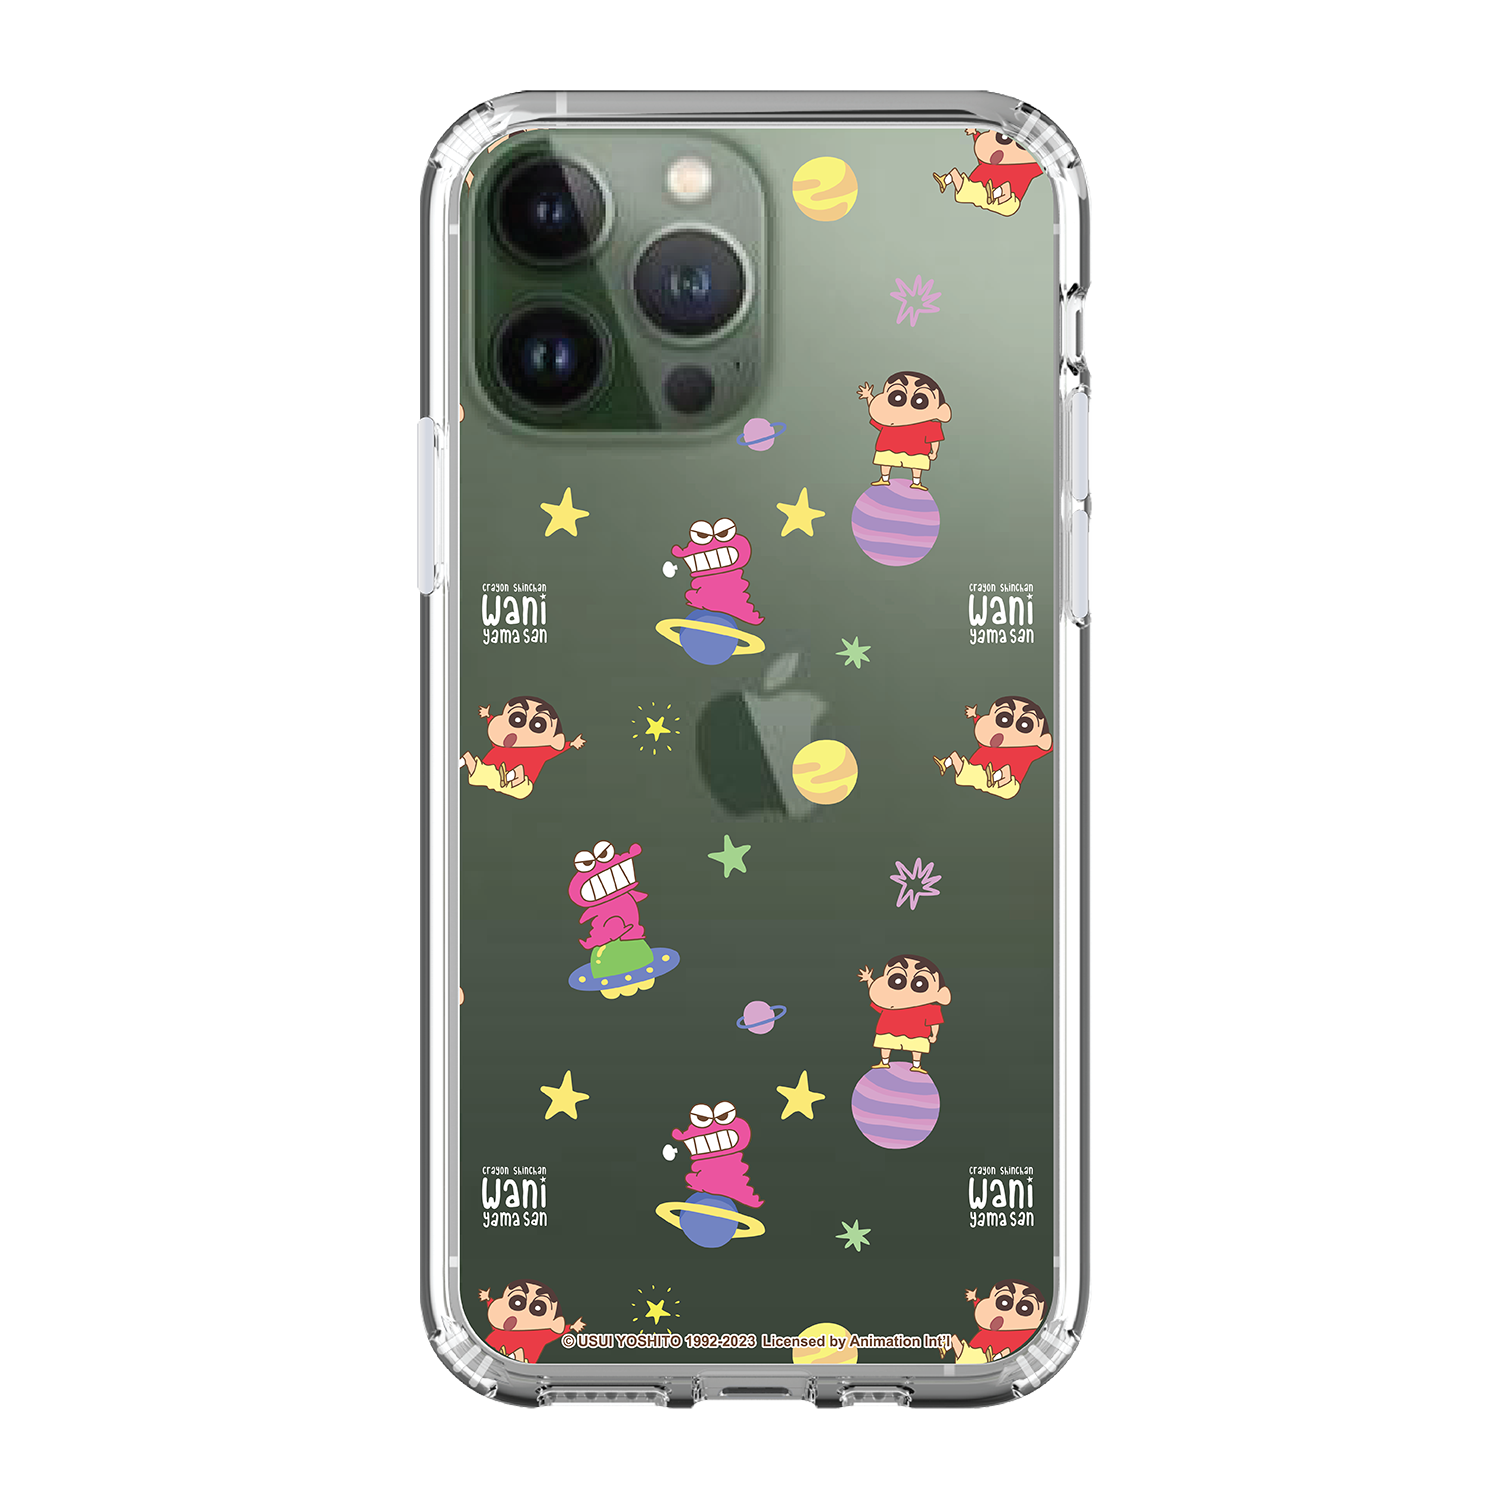 Crayon Shin-chan Clear Case / iPhone Case / Android Case / Samsung Case 蠟筆小新 正版授權 全包邊氣囊防撞手機殼 (SC276)